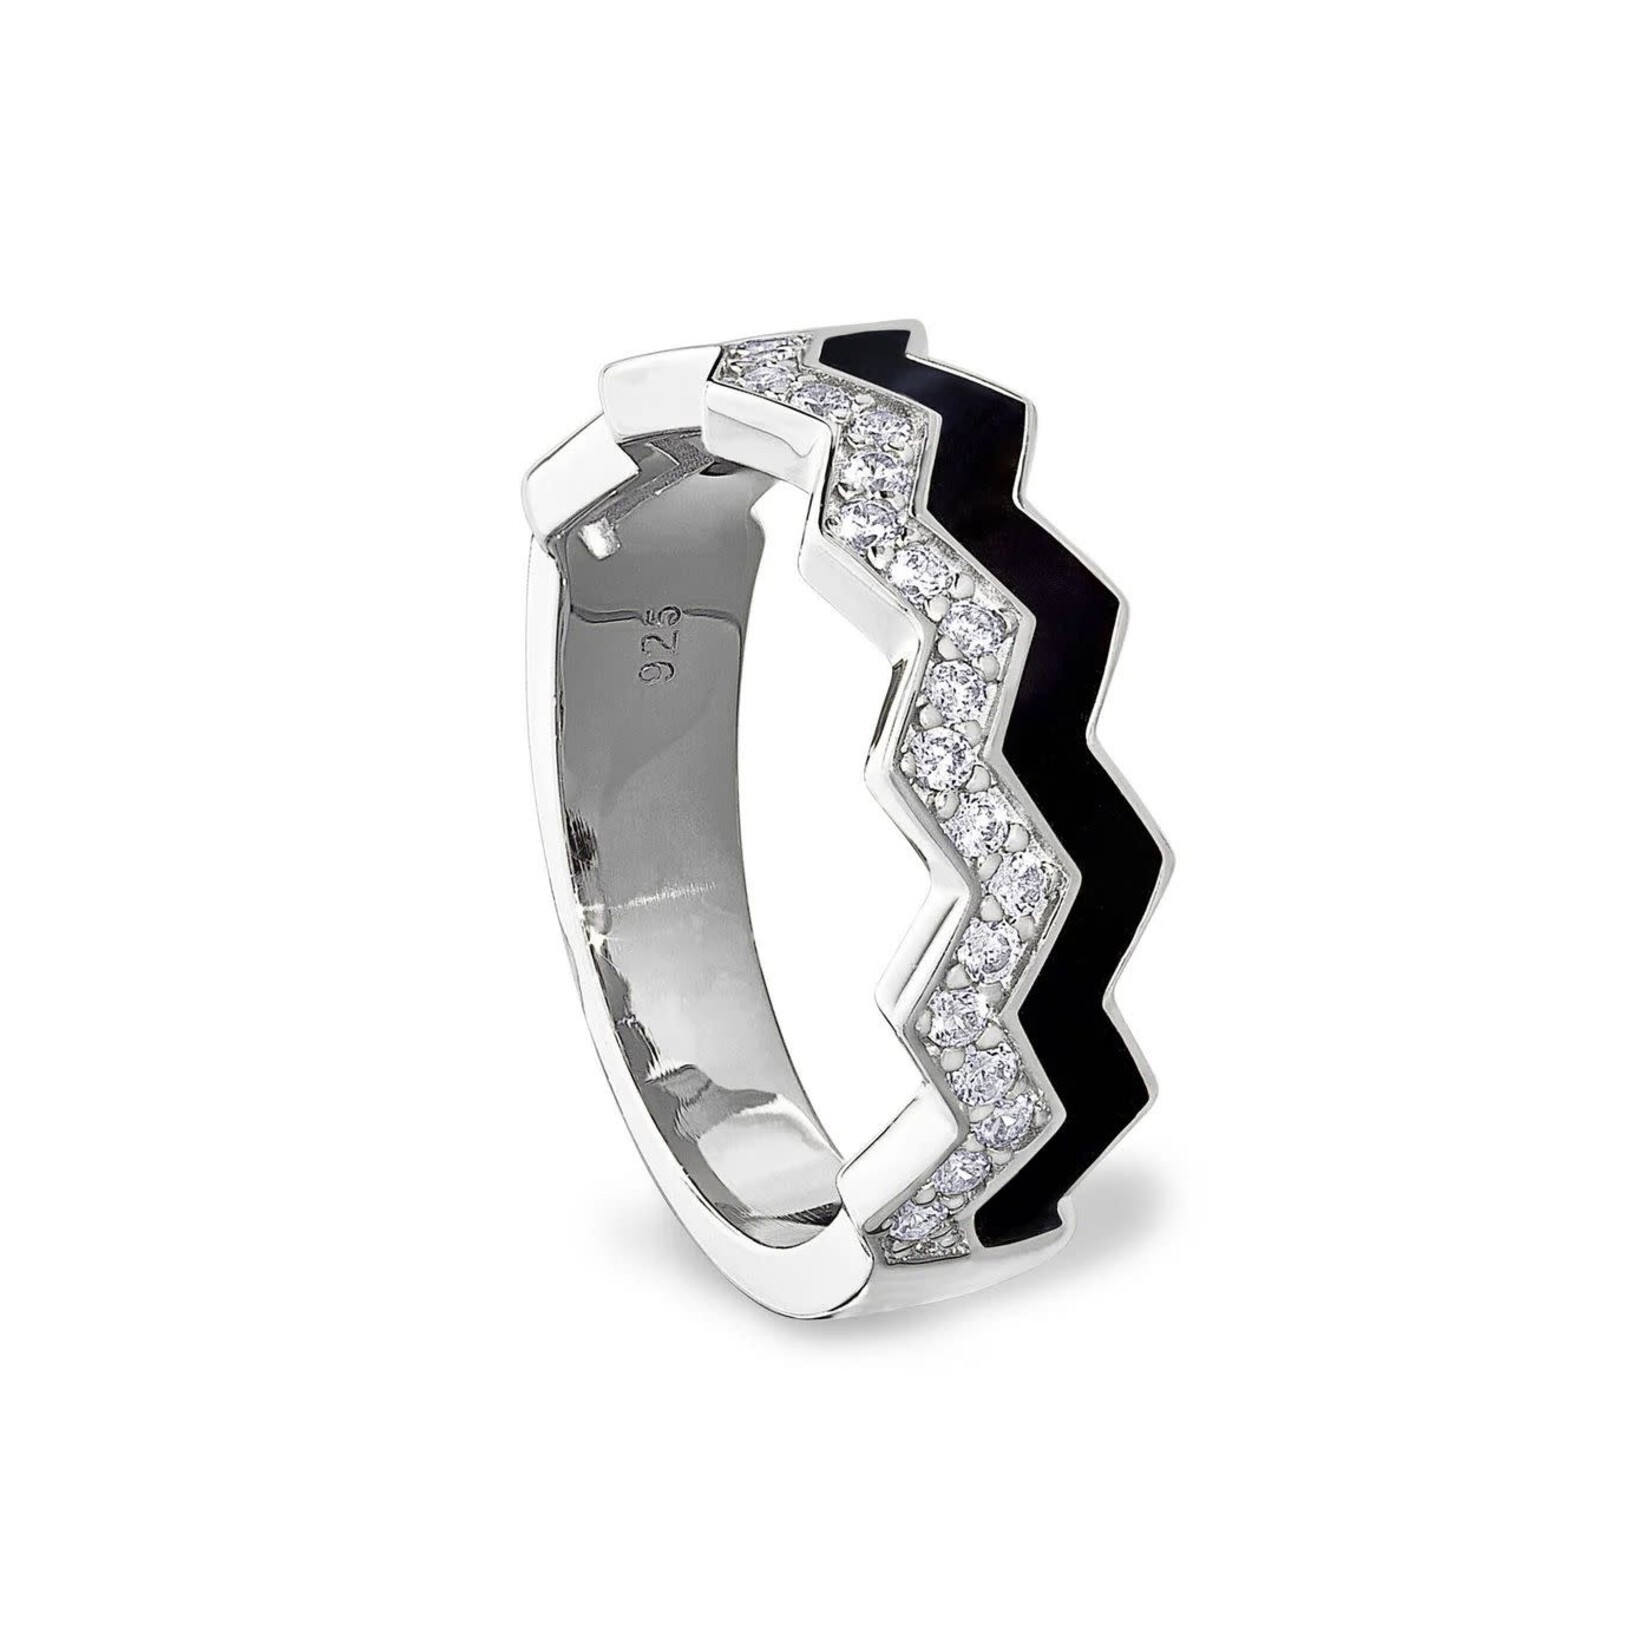 KELLY WATERS INC. Sterling Silver Black Enamel w/Simulated Diamonds Ring